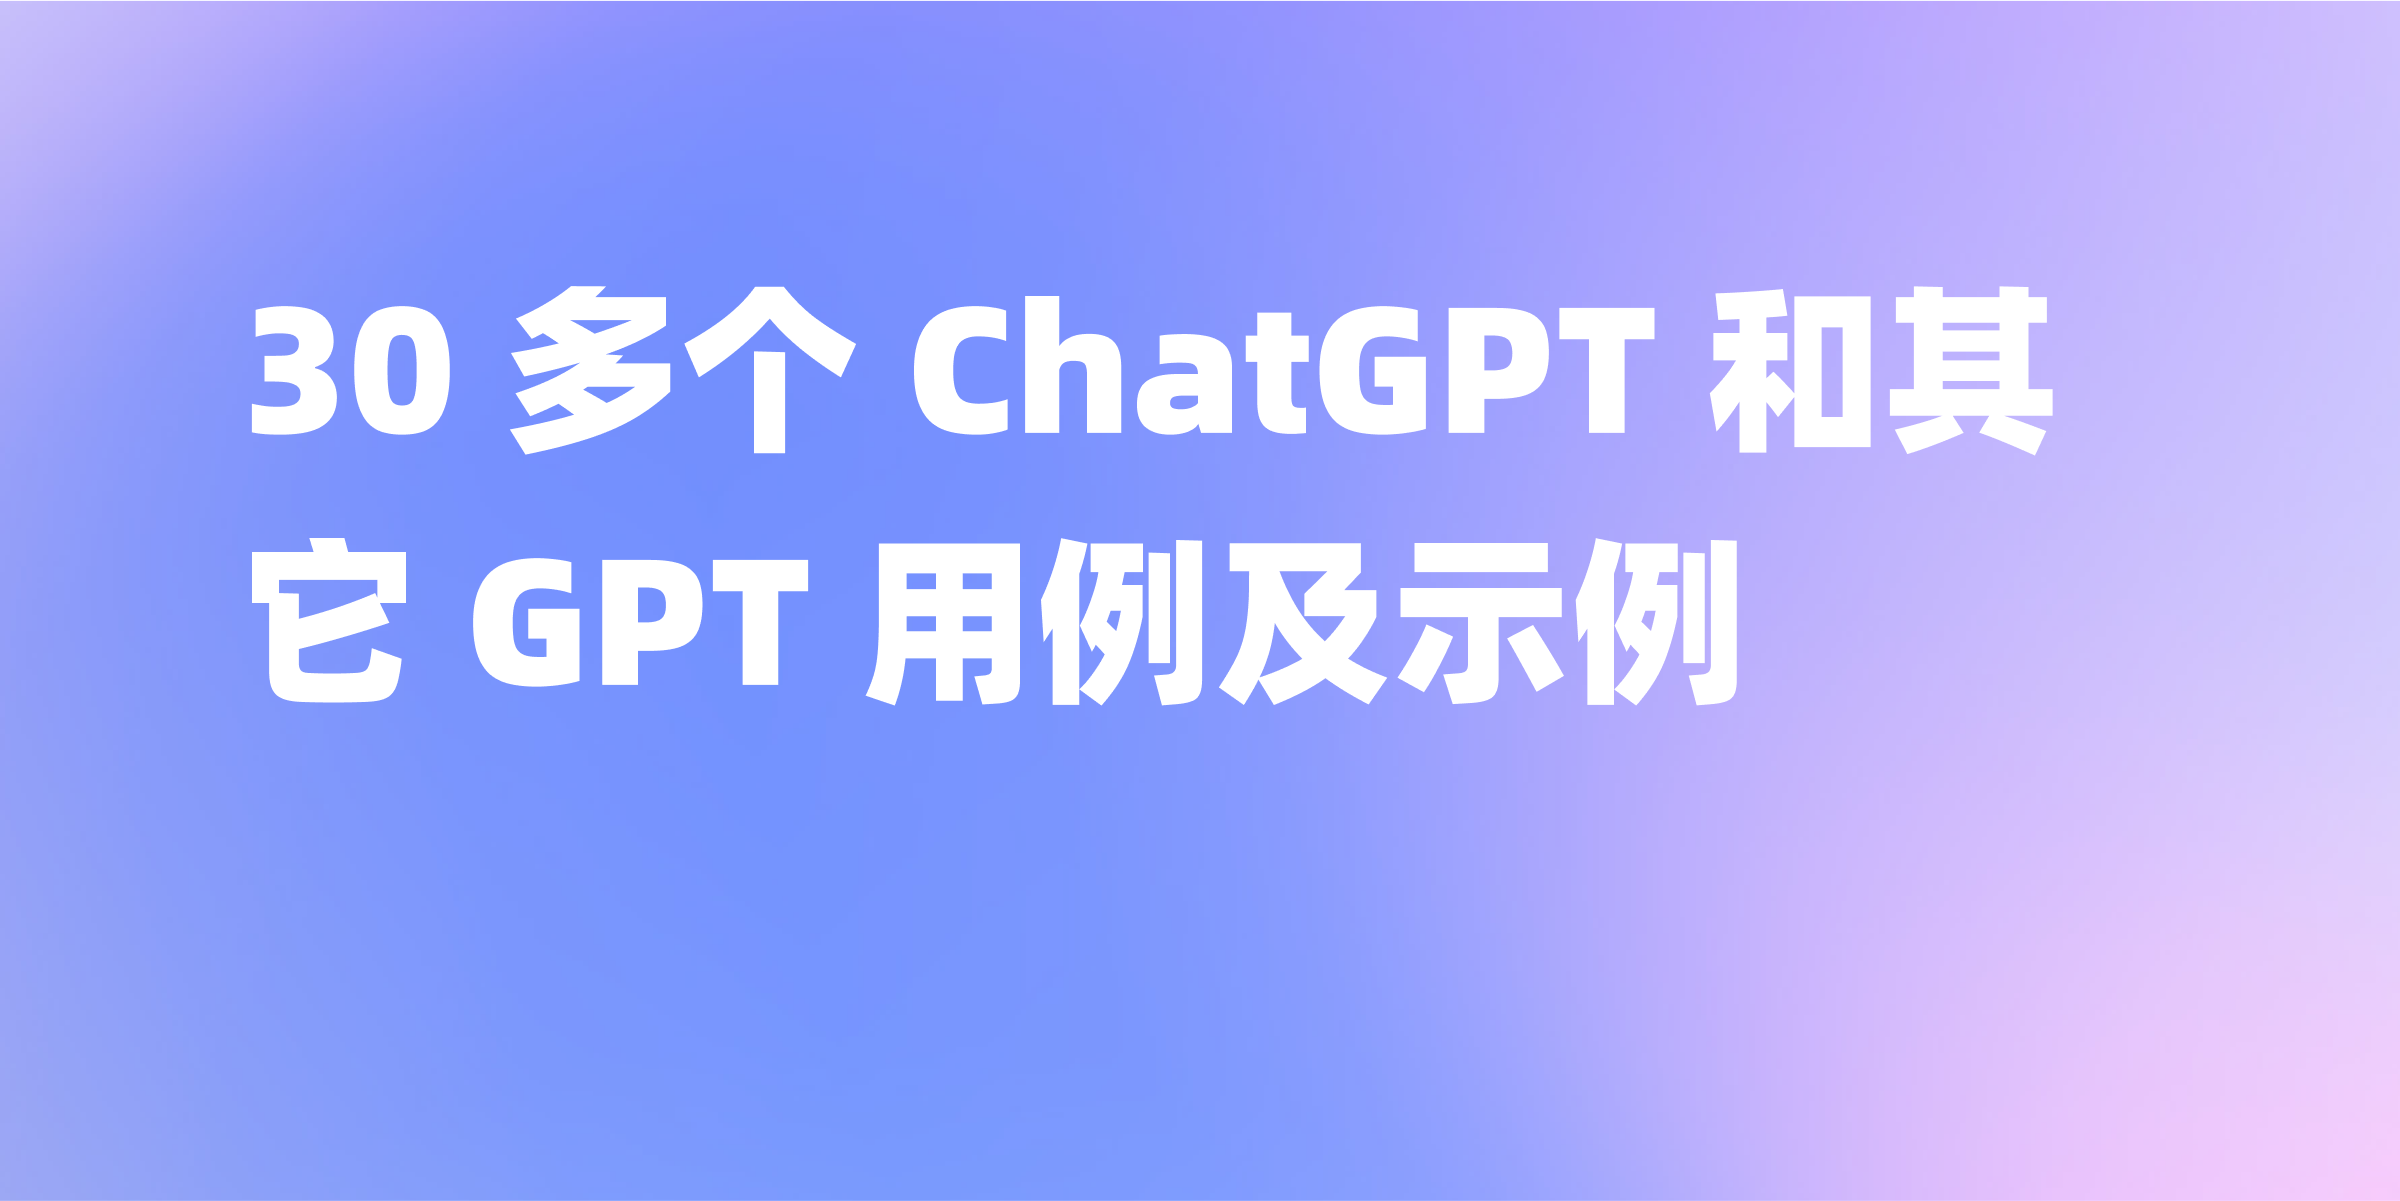 30 多个 ChatGPT 和其它 GPT 用例及示例